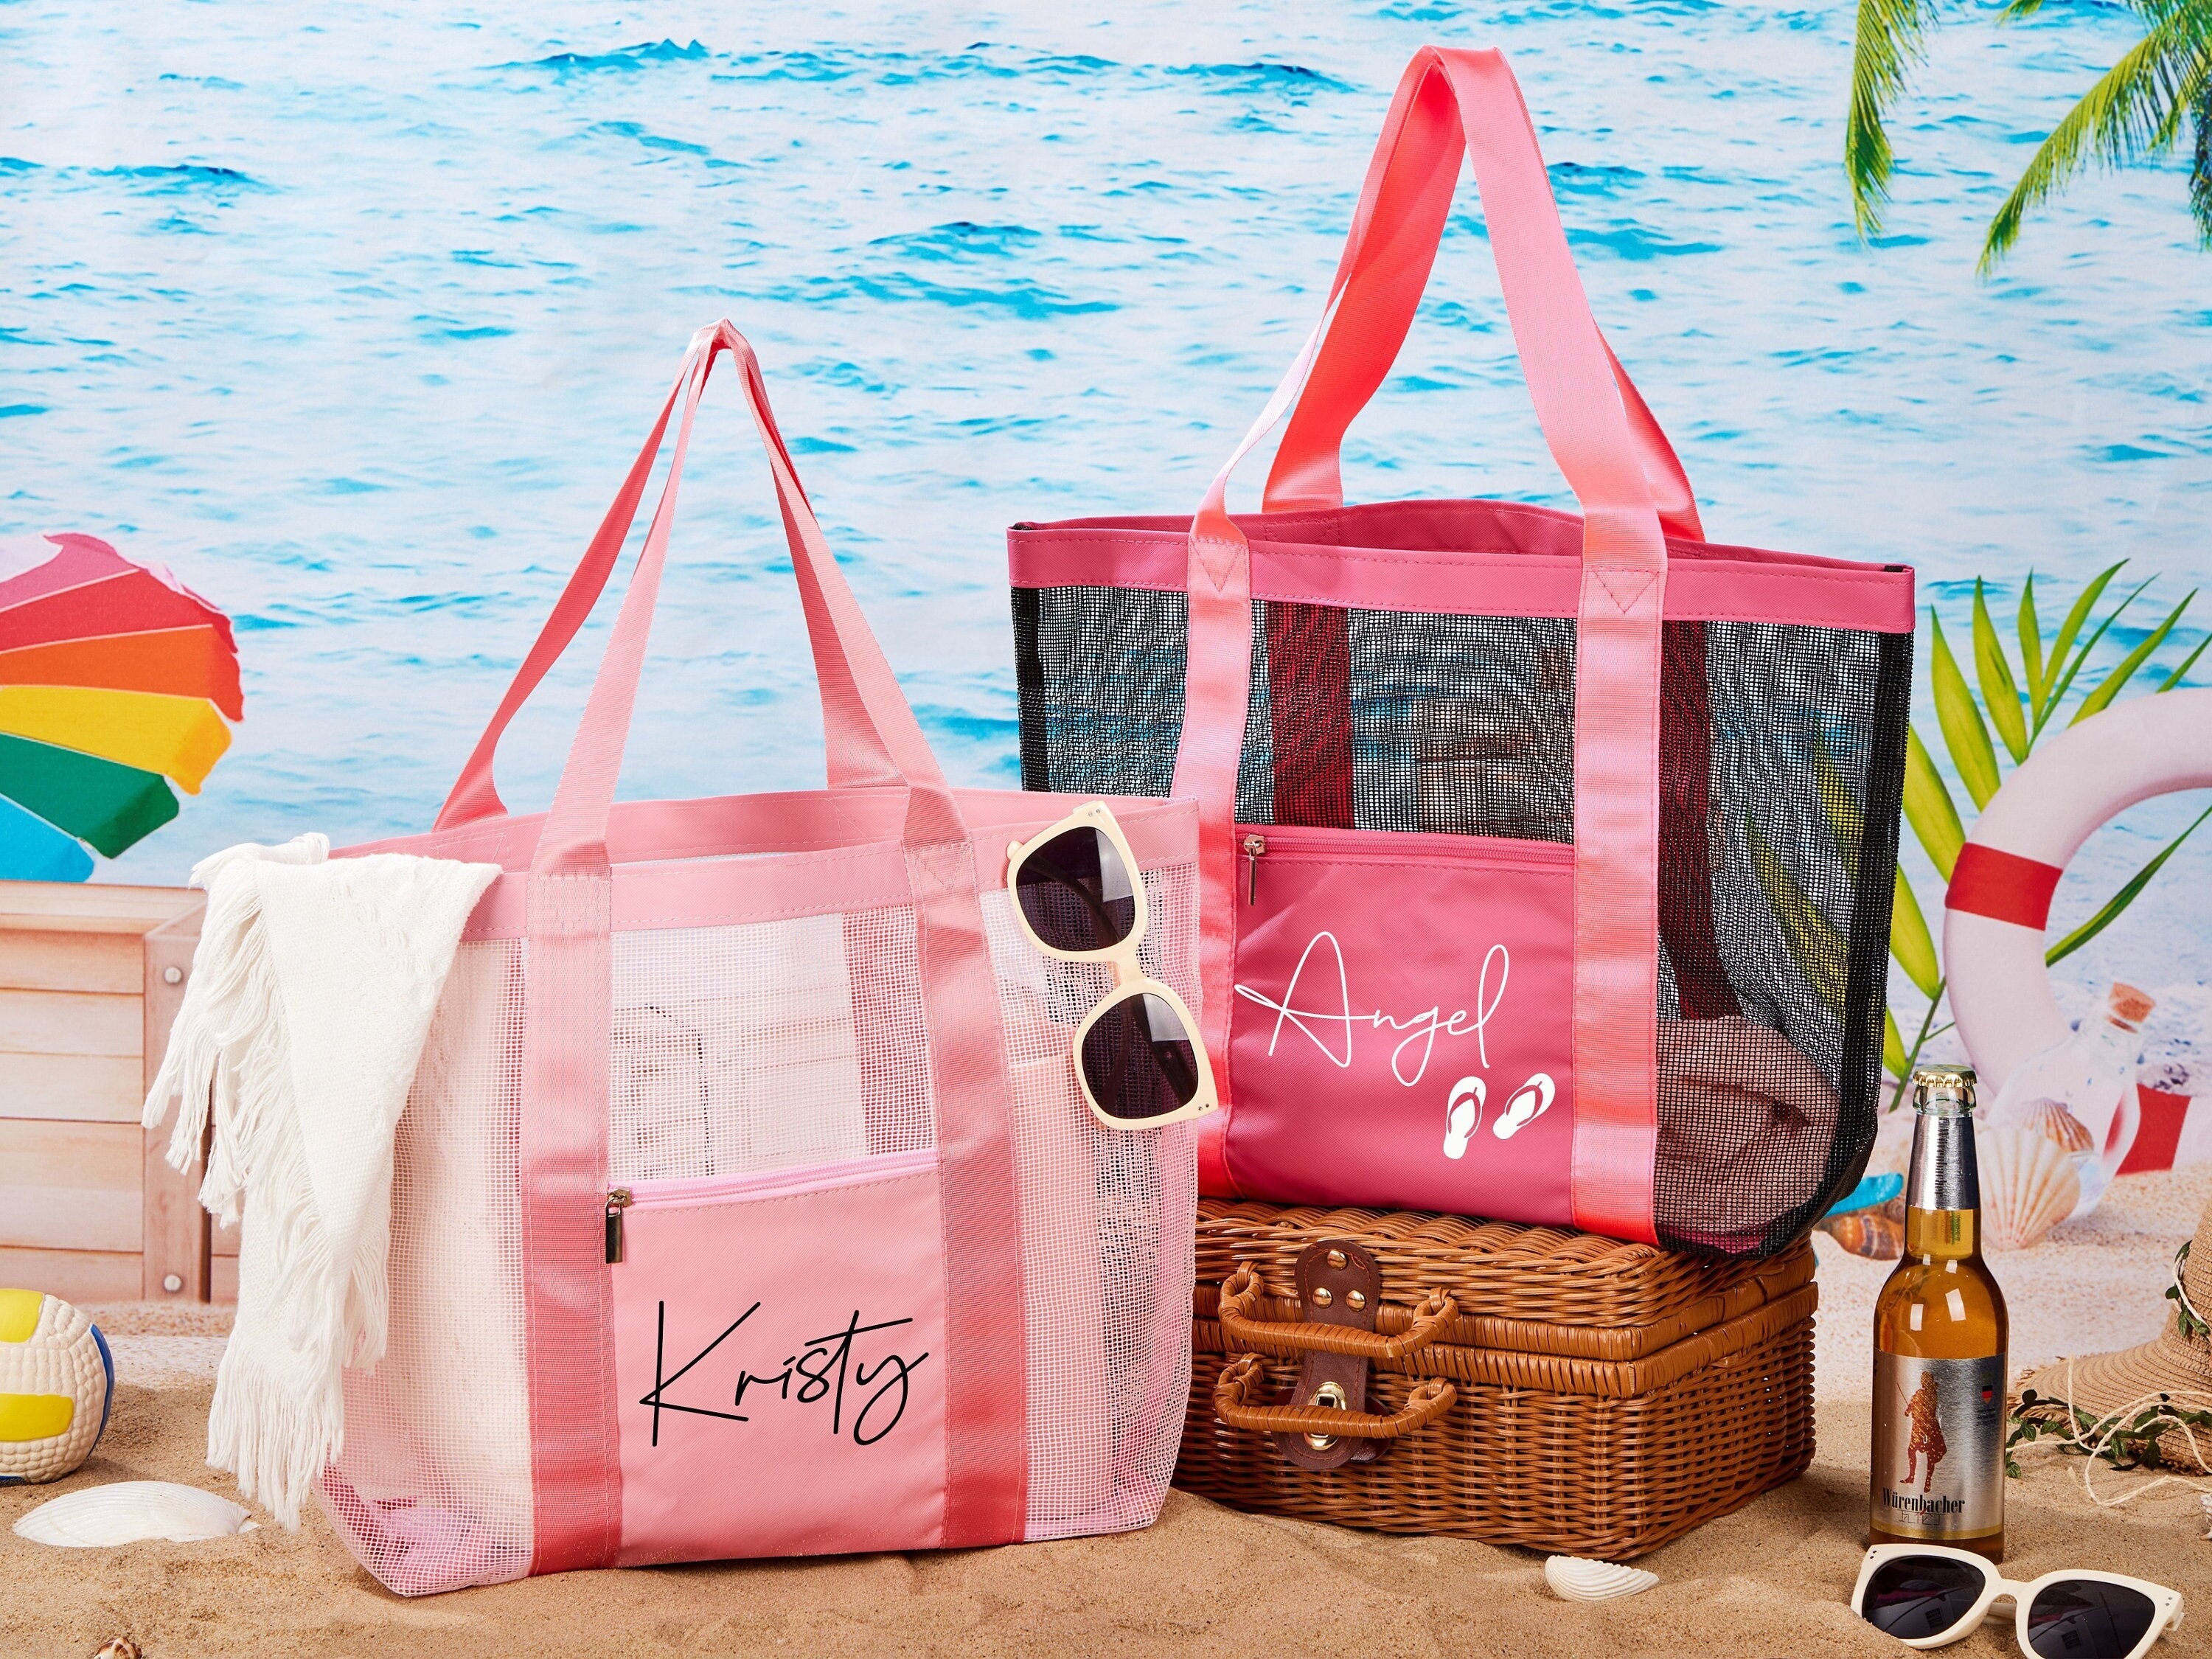 Edraco Mesh Beach Bags, Grocery Produce Tote Bag with Zipper